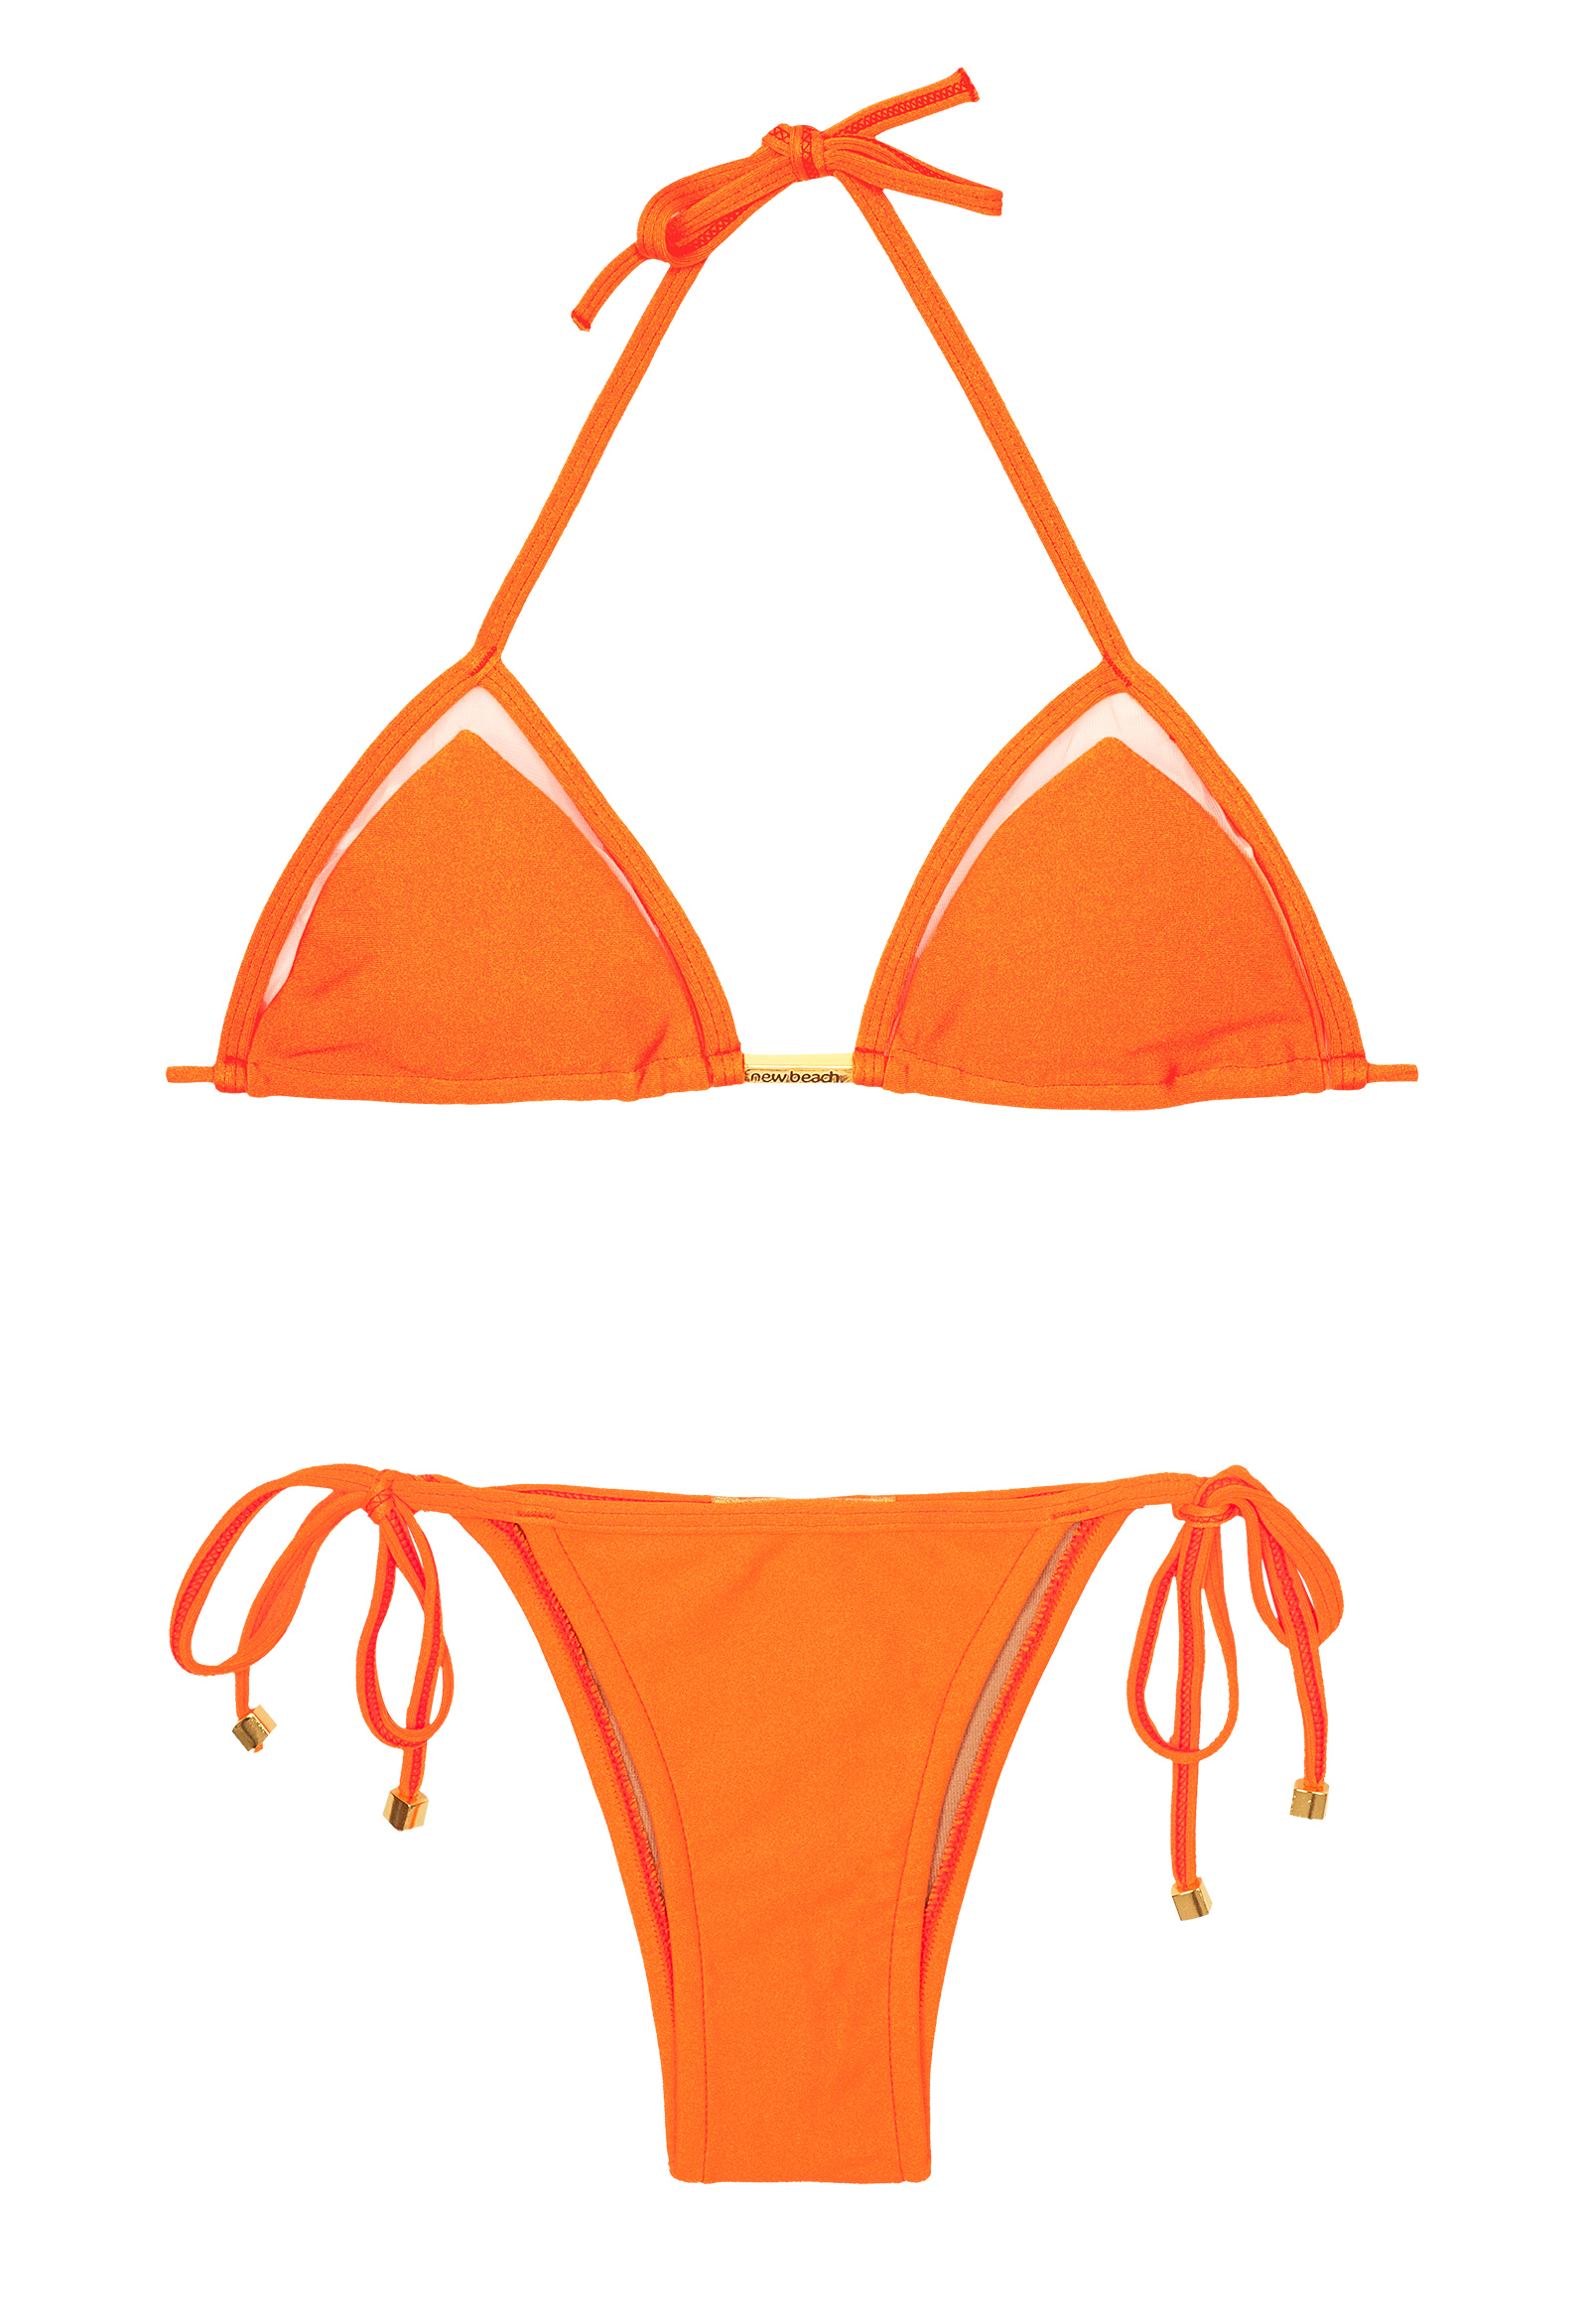 Orange Bikini, Triangle Top With Sheer Inserts - Tule Itaparica